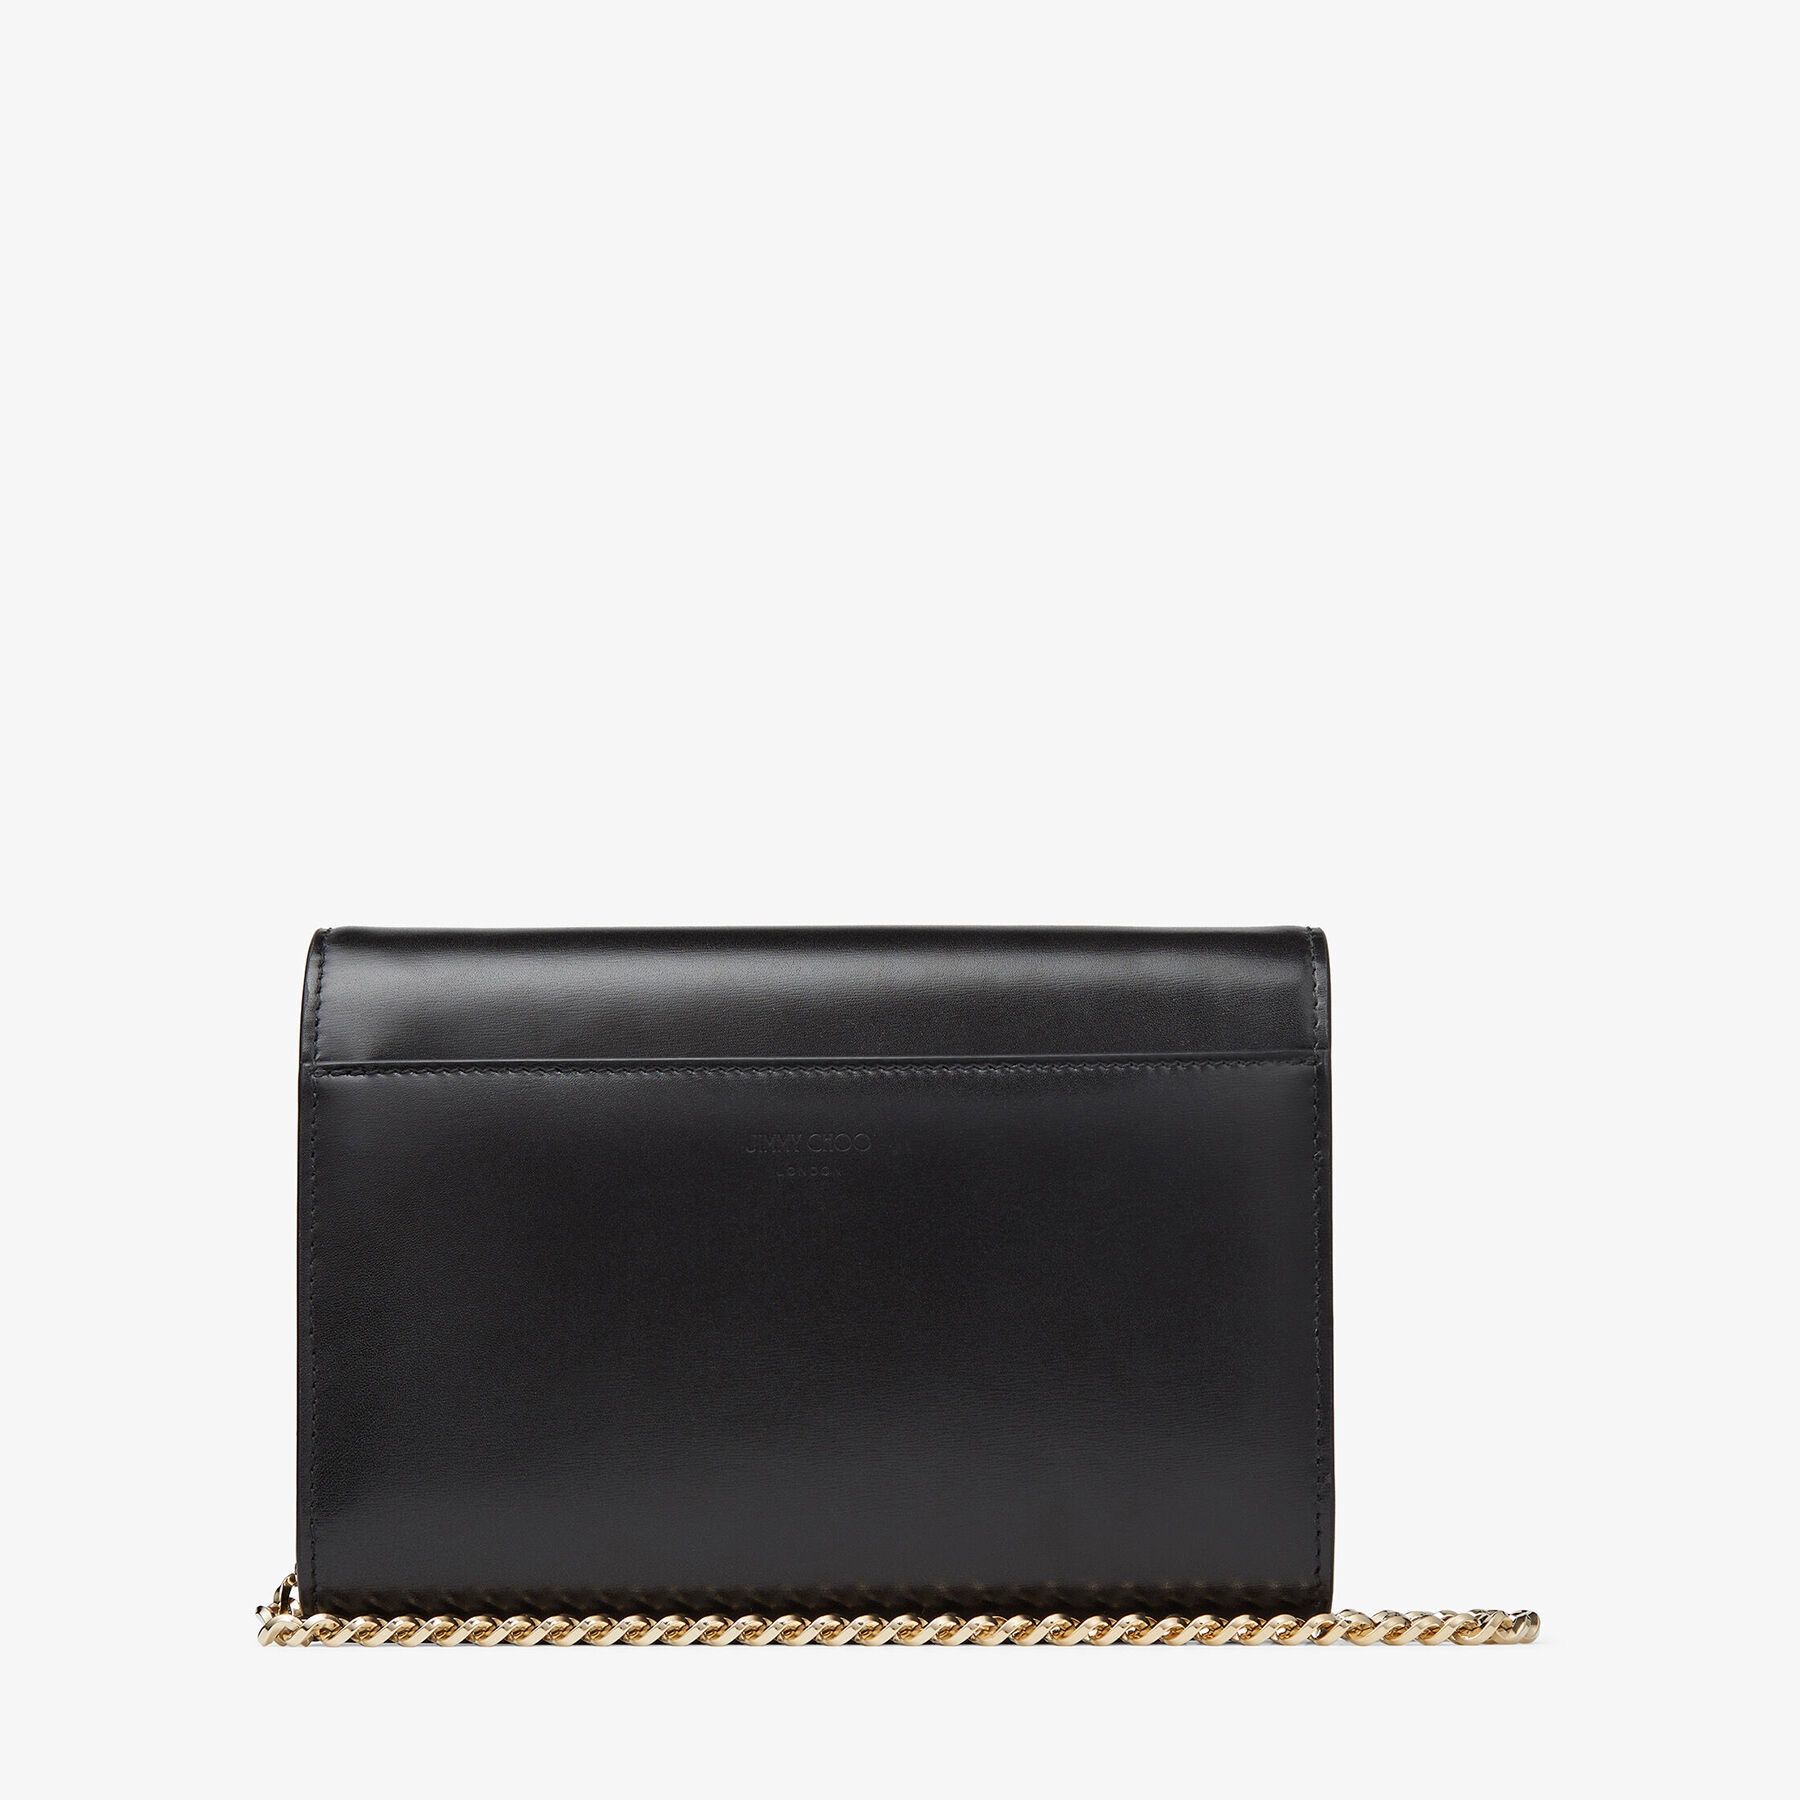 JIMMY CHOO Varenne Clutch Black Leather Clutch Bag with Crystal Bar and  Gold JC Emblem | REVERSIBLE